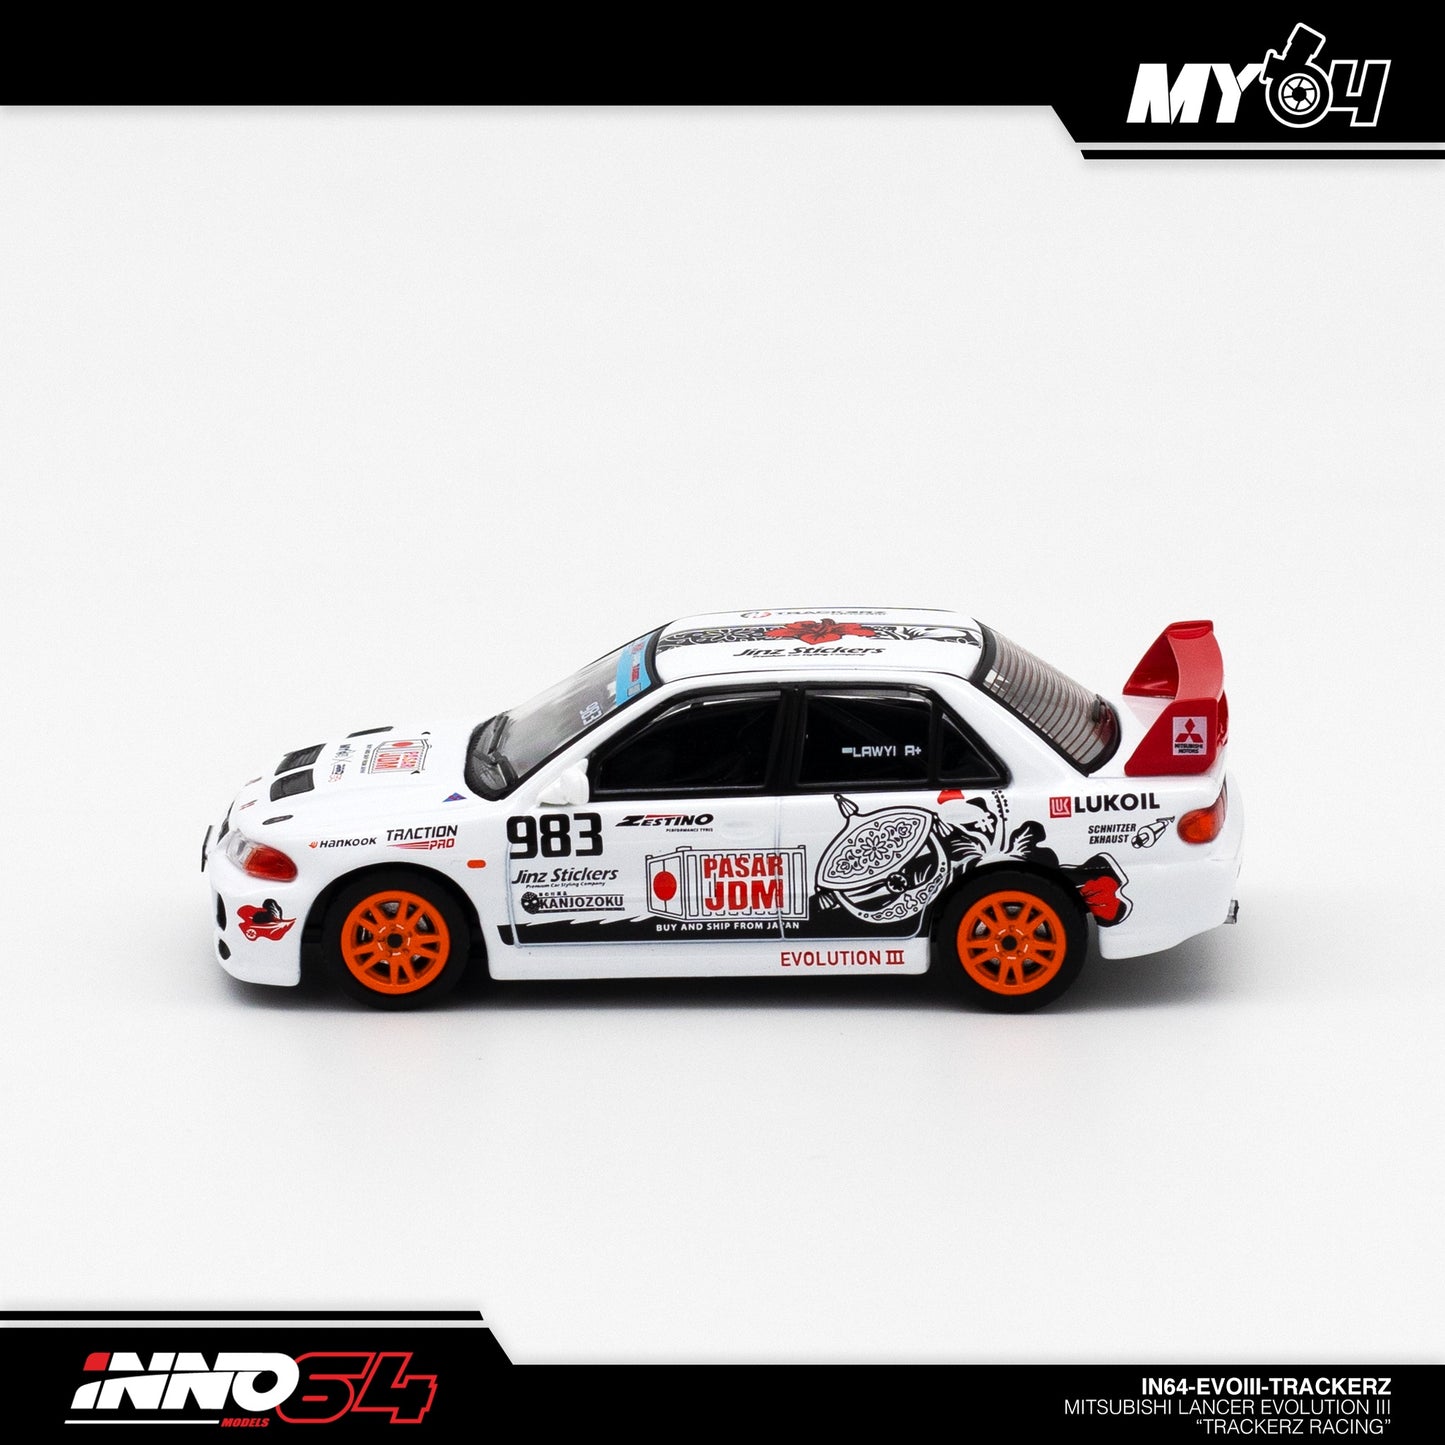 [INNO64] Mitsubishi Lancer Evolution III "Trackerz Racing"